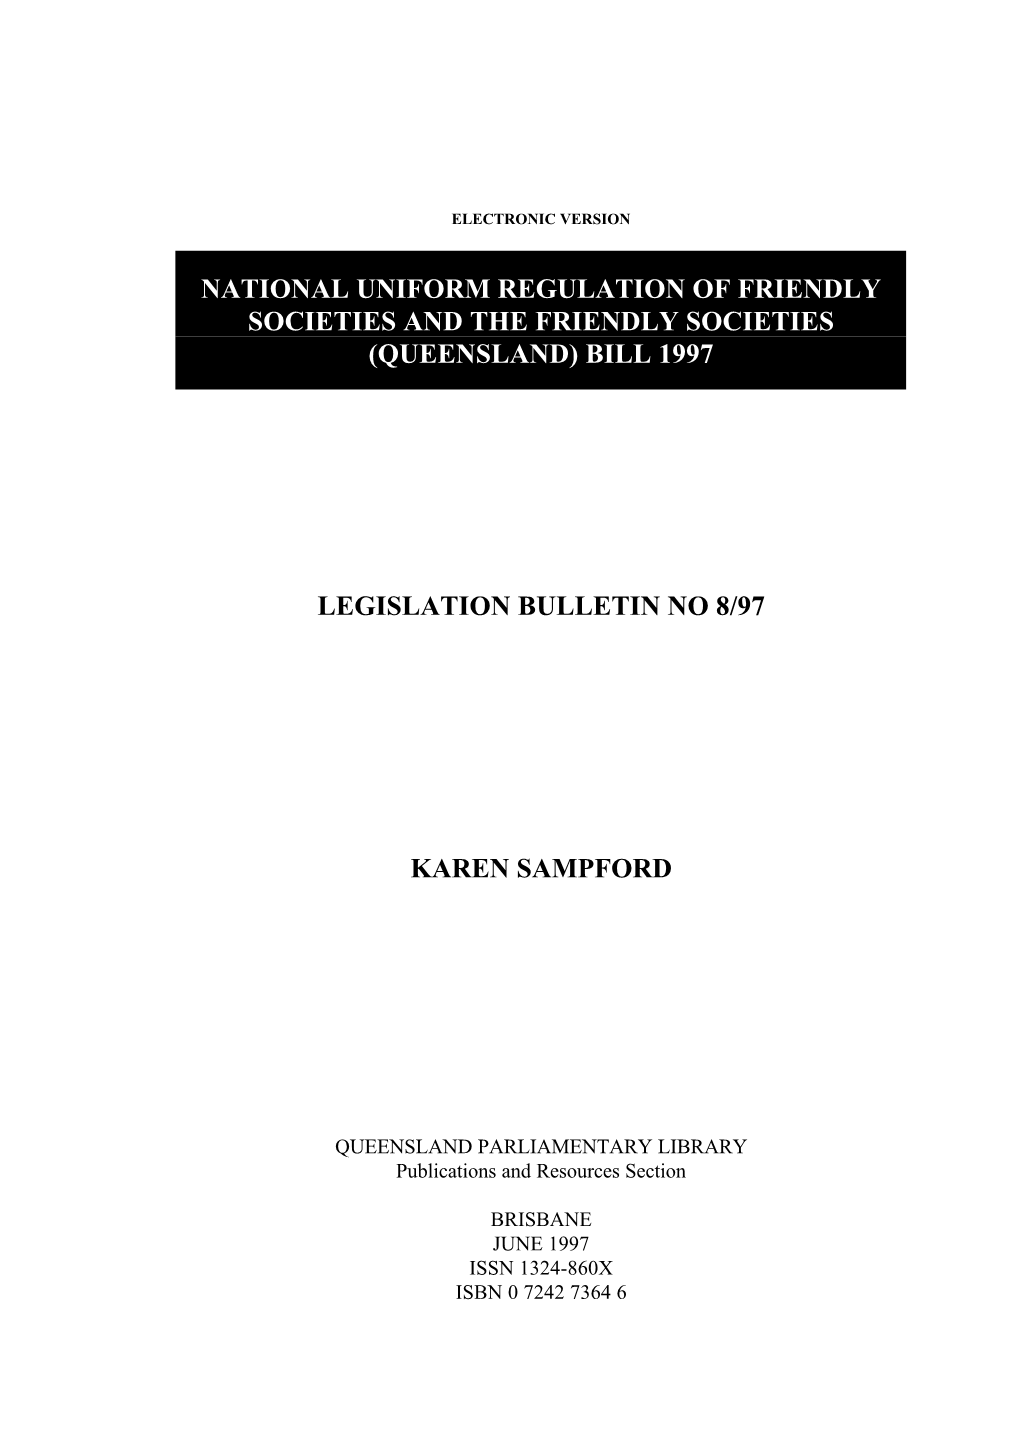 National Uniform Regulation of Friendly Societies and the Friendly Societies (Queensland) Bill 1997